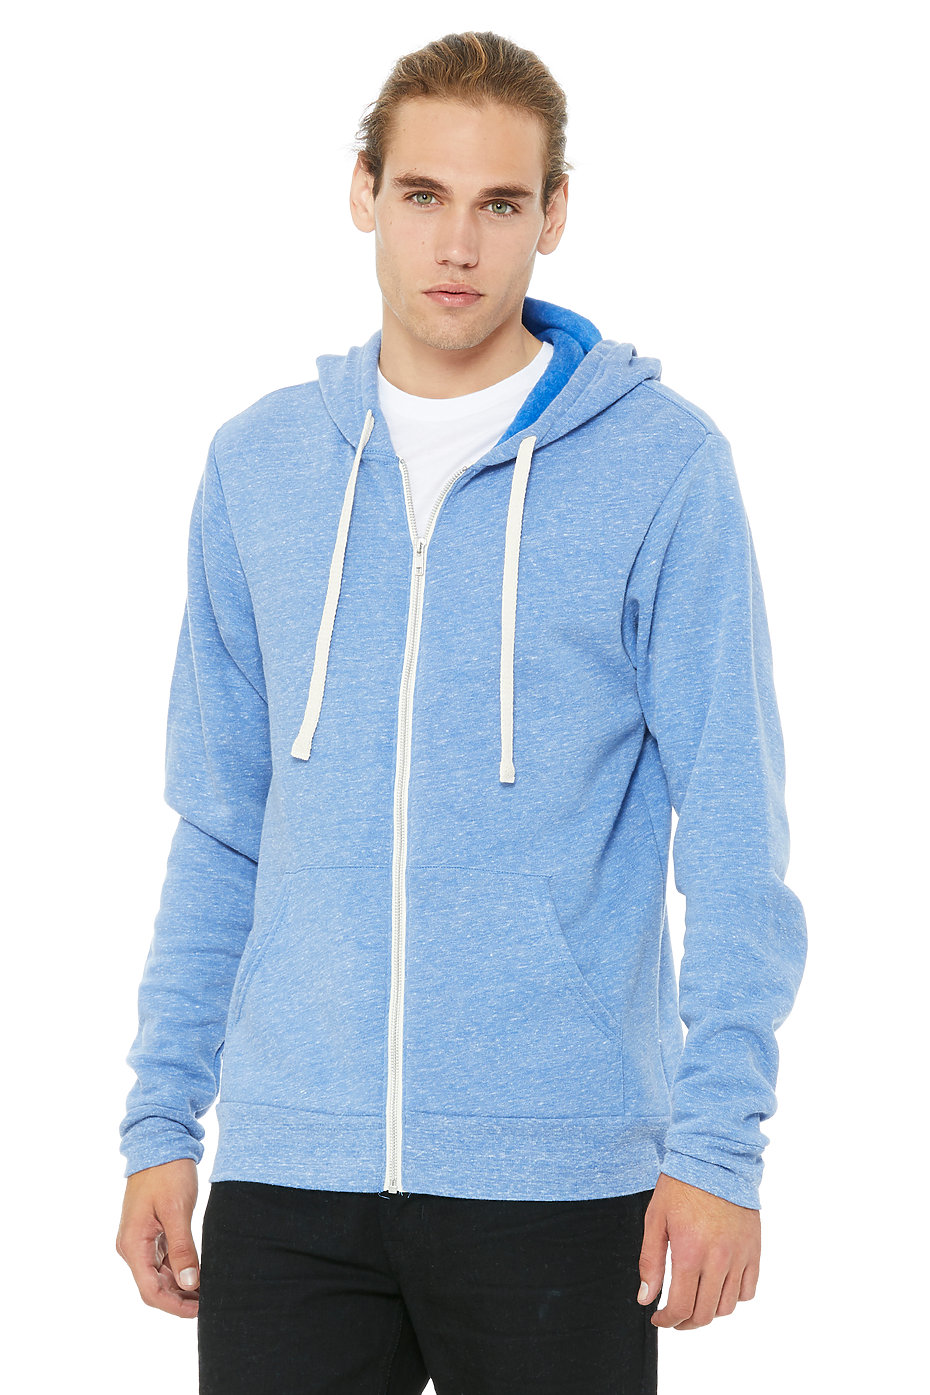 Sky Blue Heather Full Zip Hooded Tri-Blend Fleece Sweatshirt - Made in USA